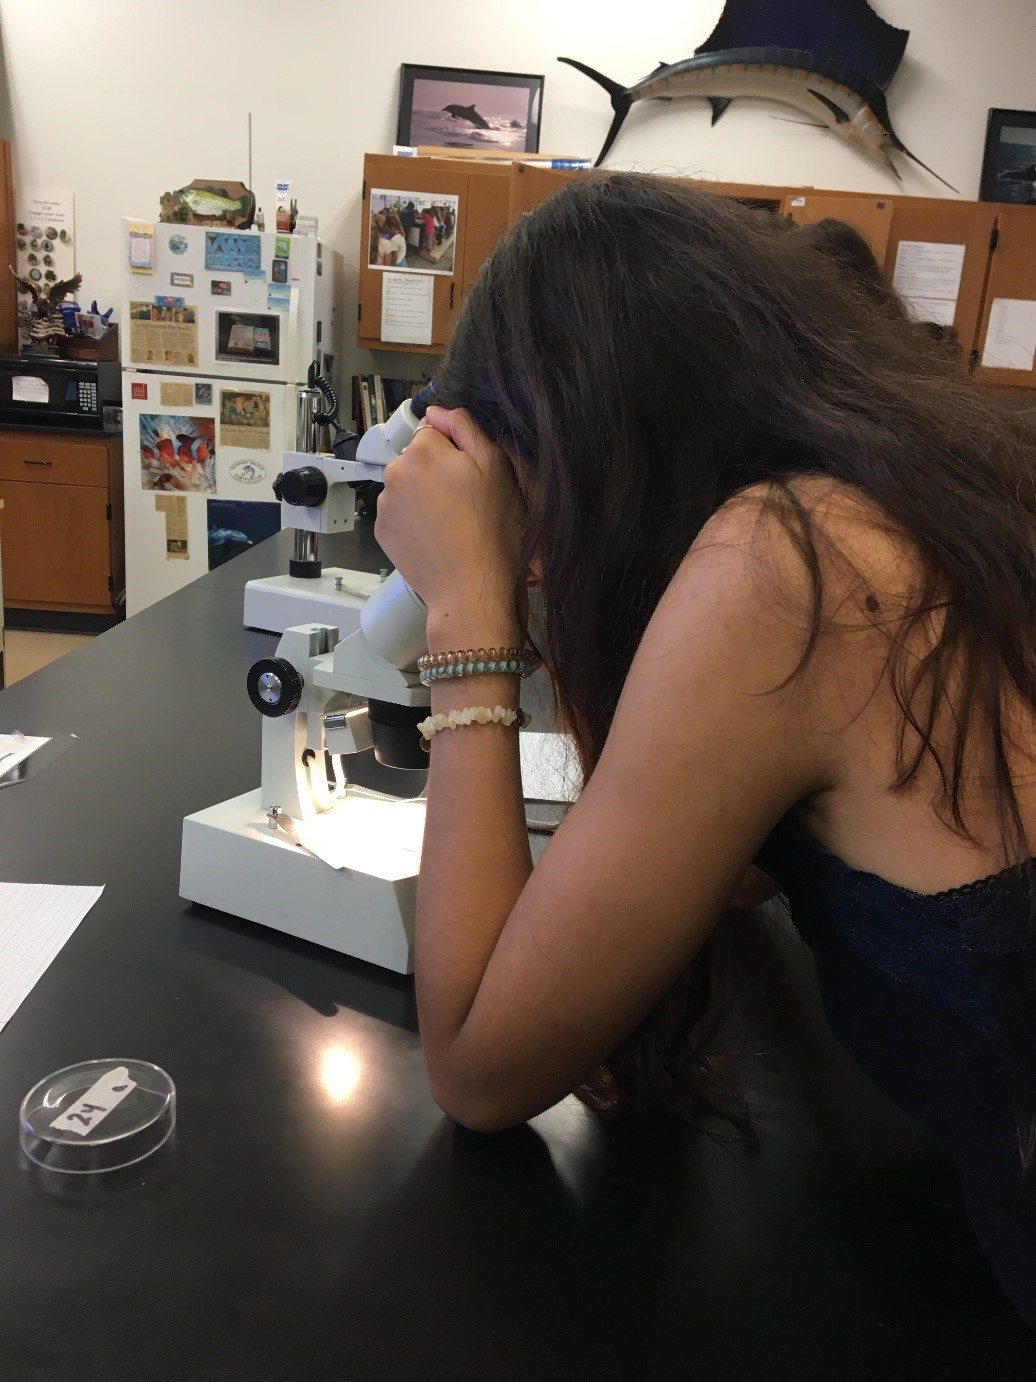 alexis-scholarship-story-microscope.jpg